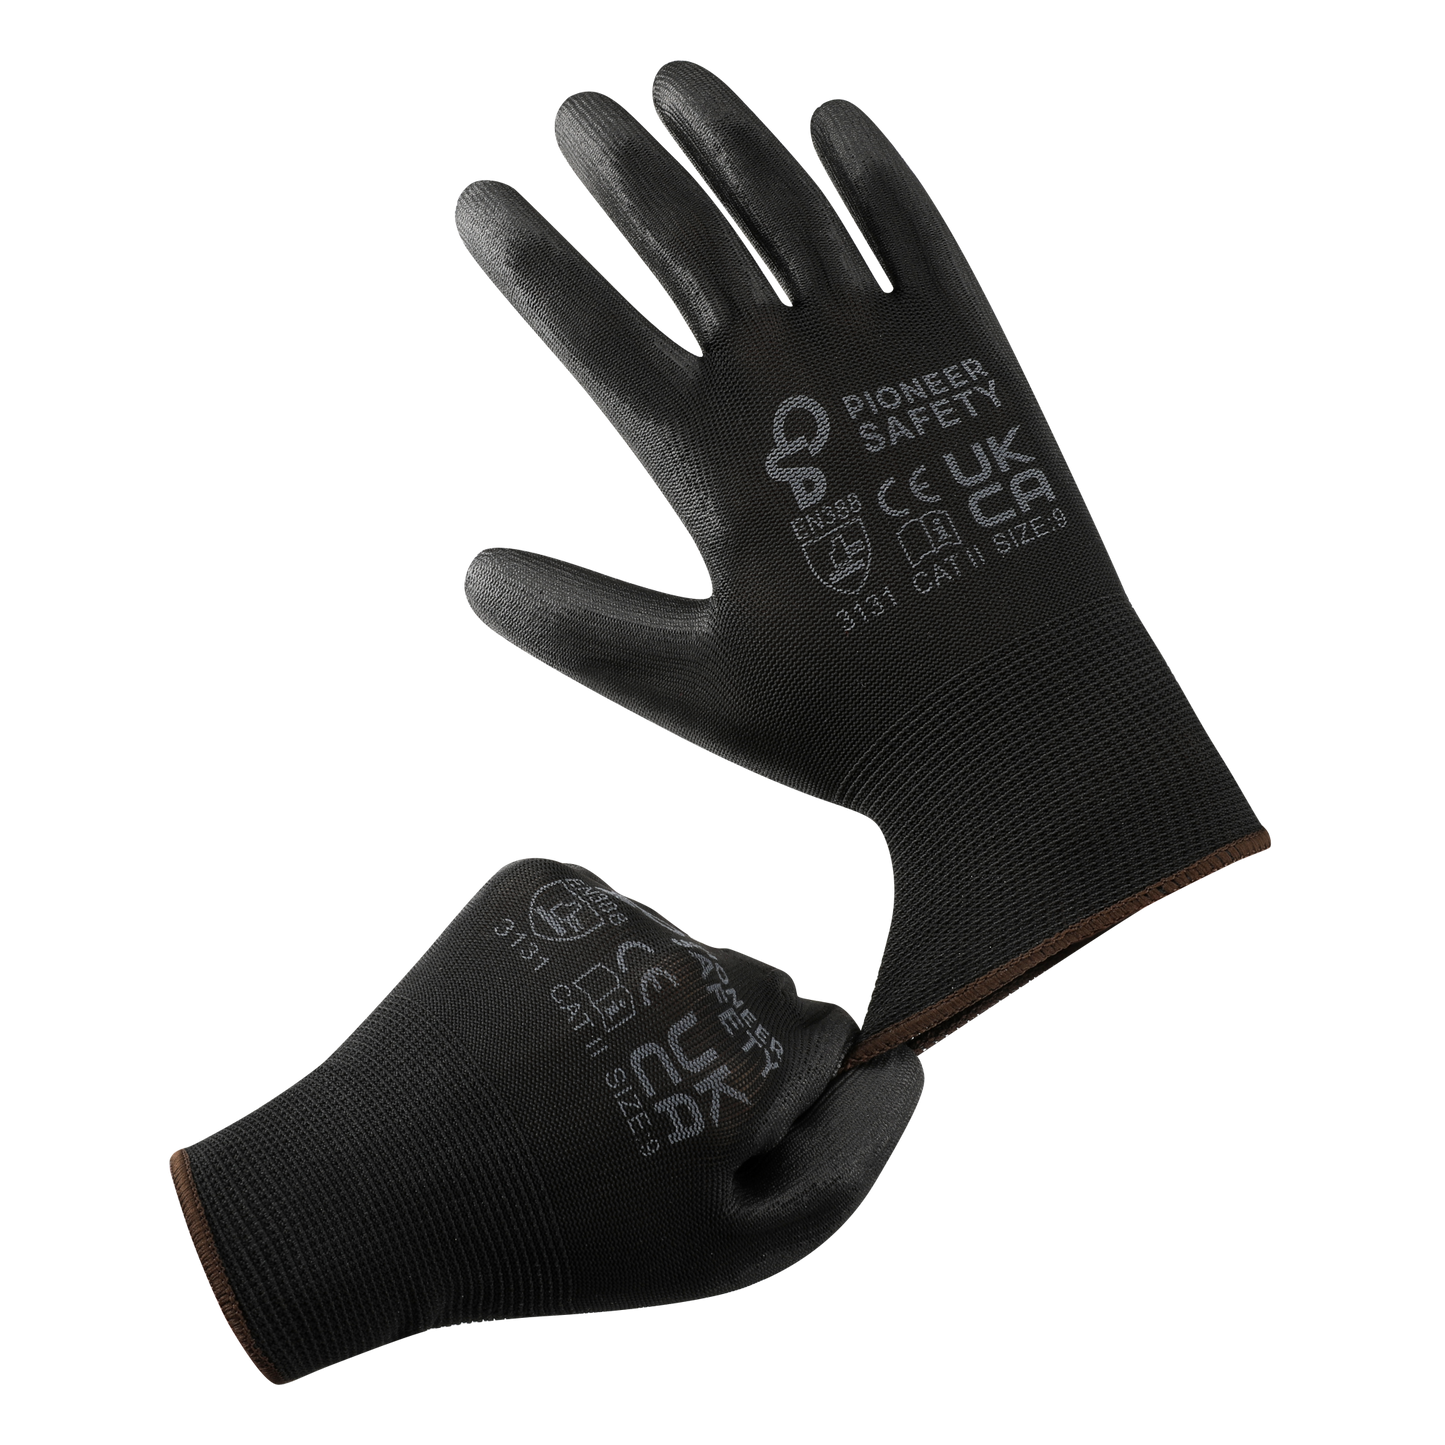 VIP Pioneer Safety Pack of 12 Tenaci Safety Work Gloves PU Coated Nylon Non-Slip Work Gloves Gardening Gloves Builders Gloves, Black,